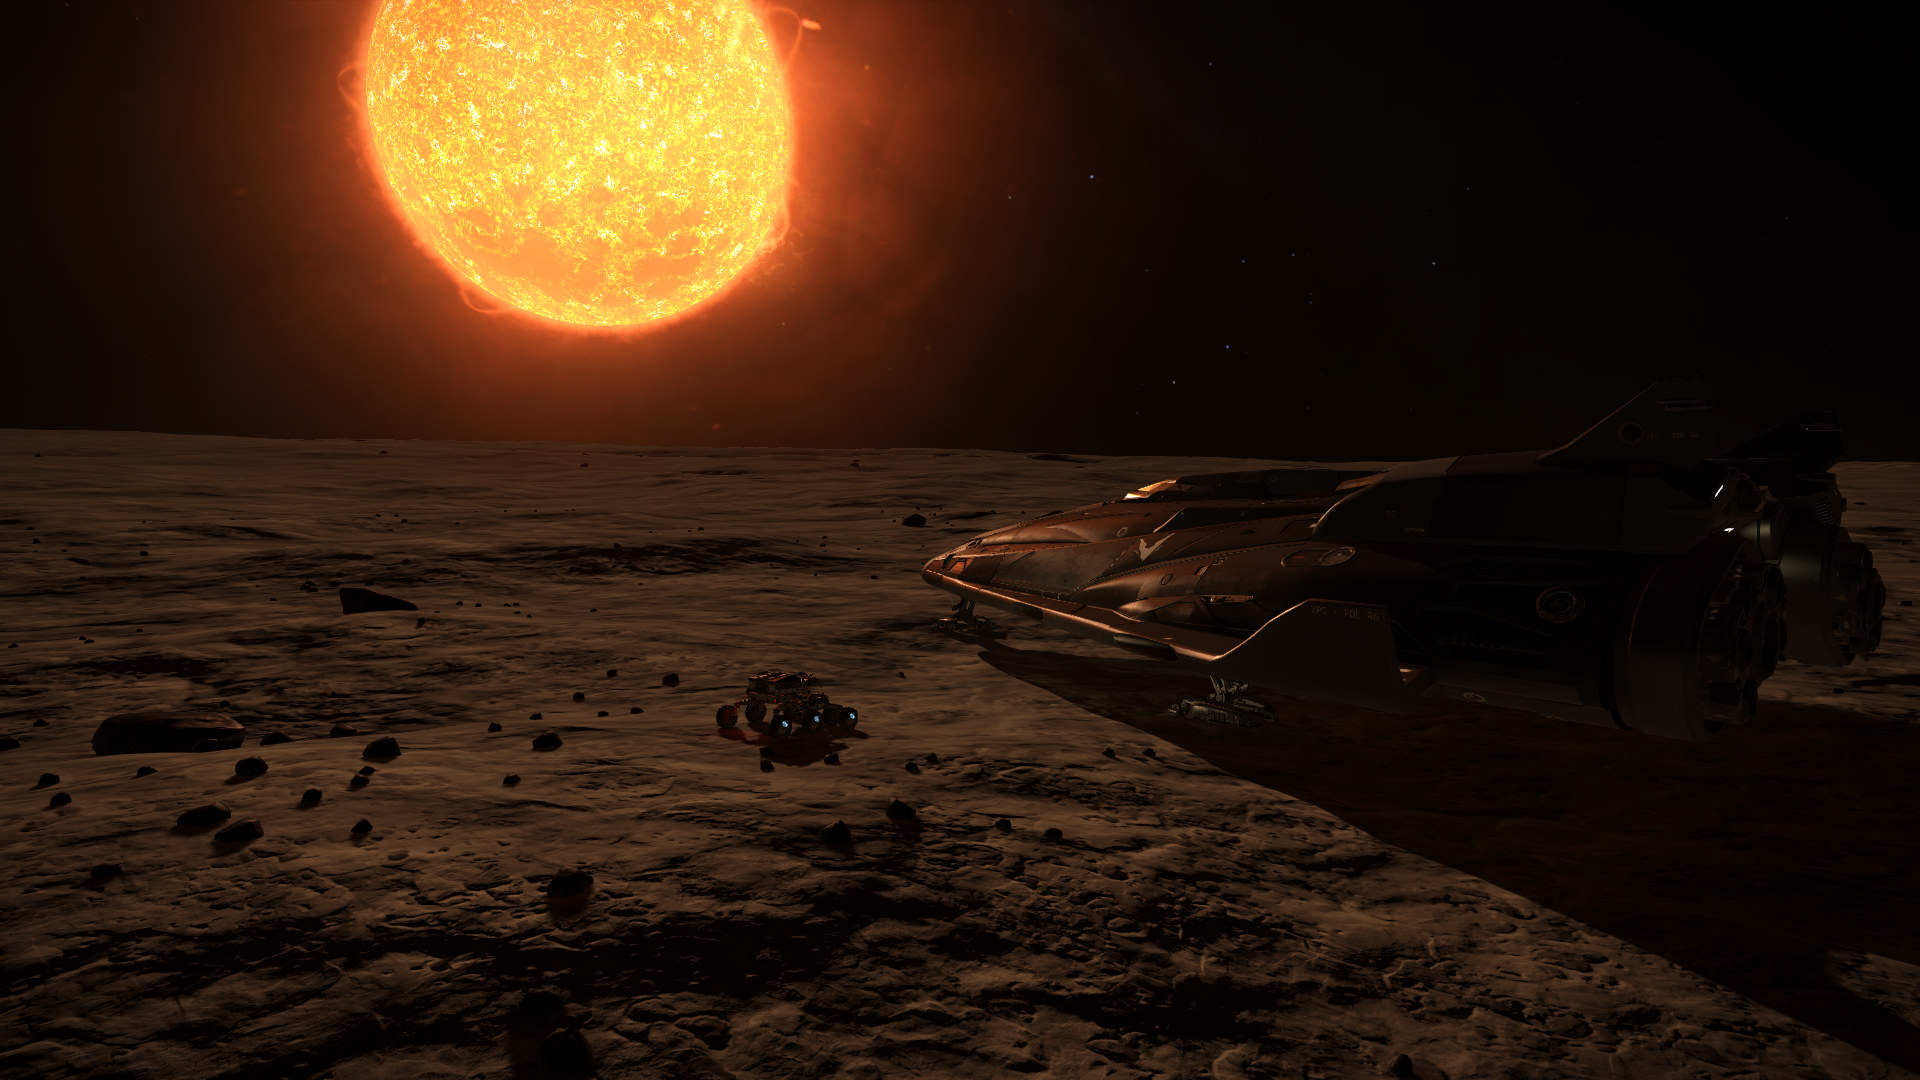 Fer-de-Lance docked on rocky planet and deployed SRV.